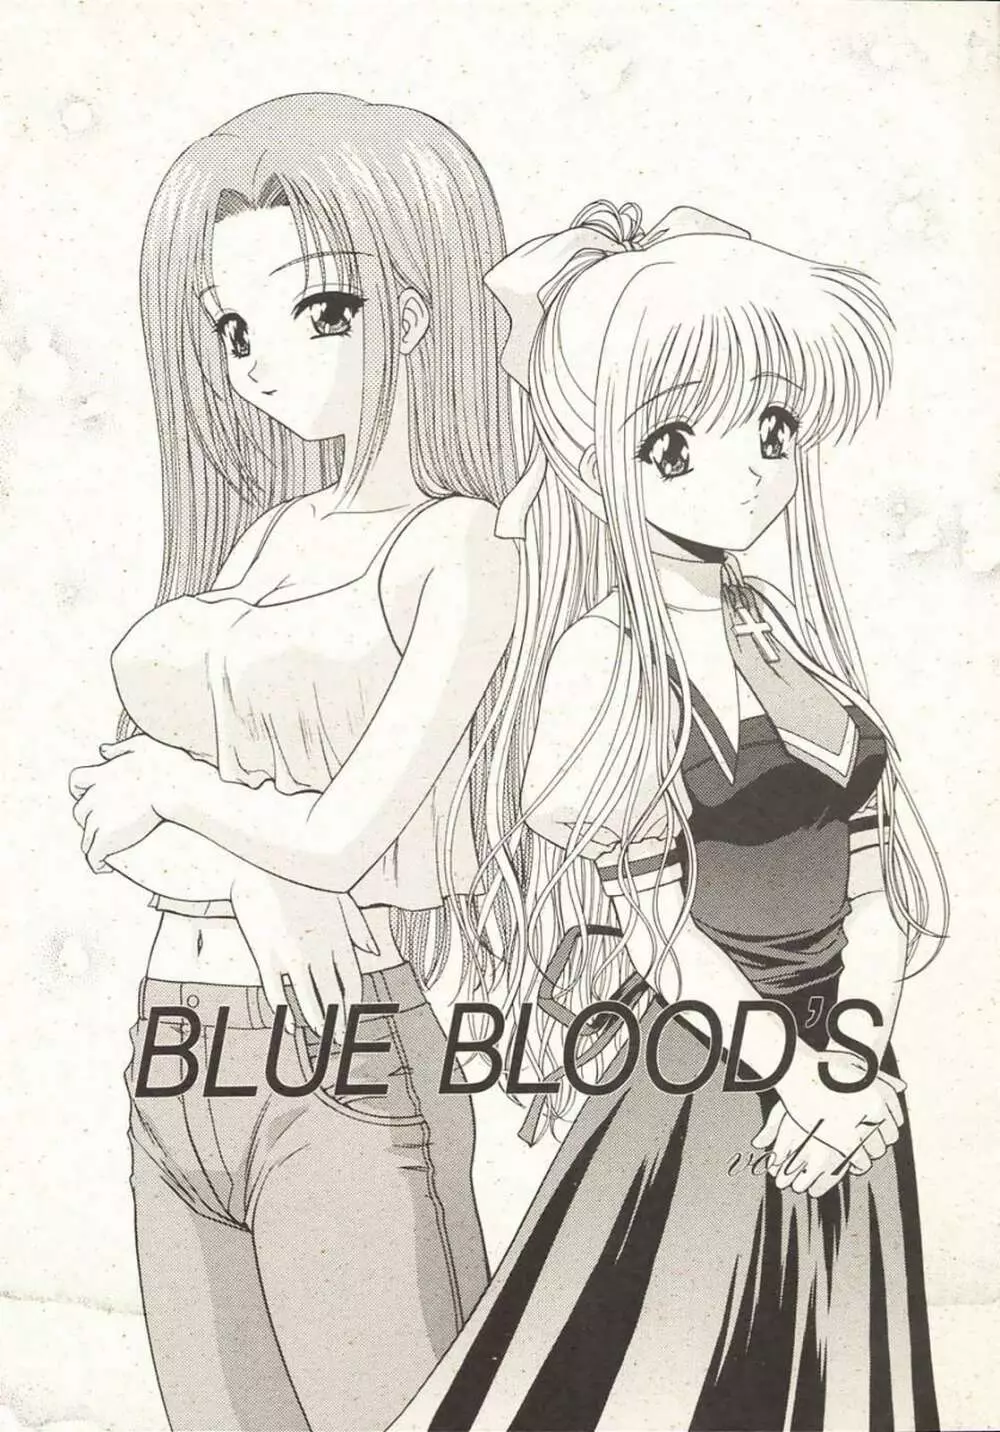 BLUE BLOODS vol. 7